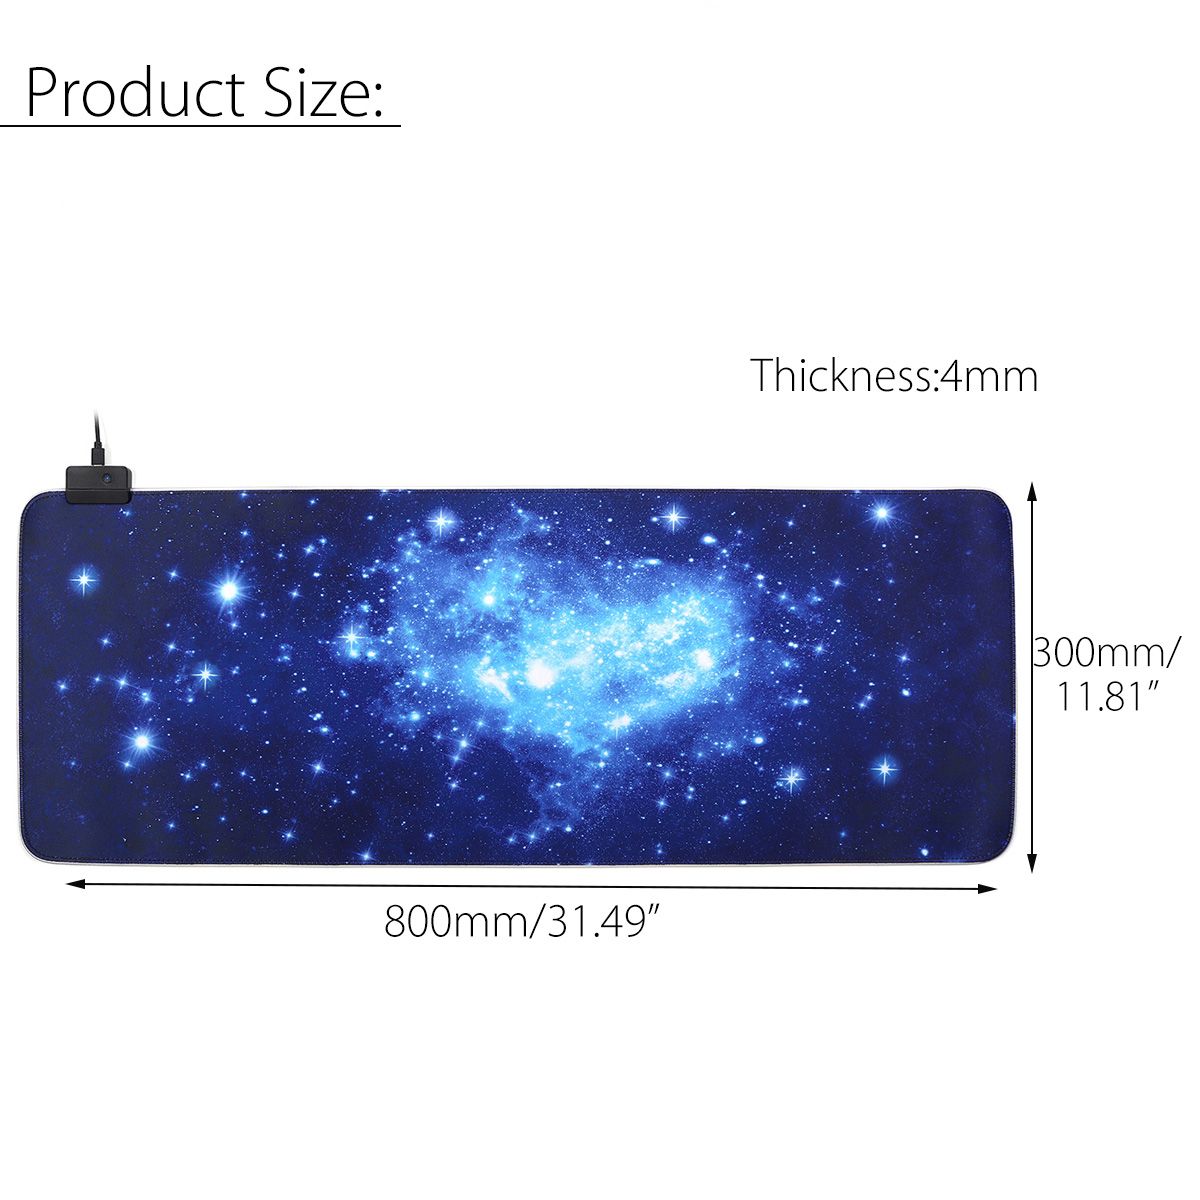 8004003mm-USB-Wired-LED-Bakclit-Starry-Sky-Large-Mouse-Pad-Desktop-Pad-Mat-1446987